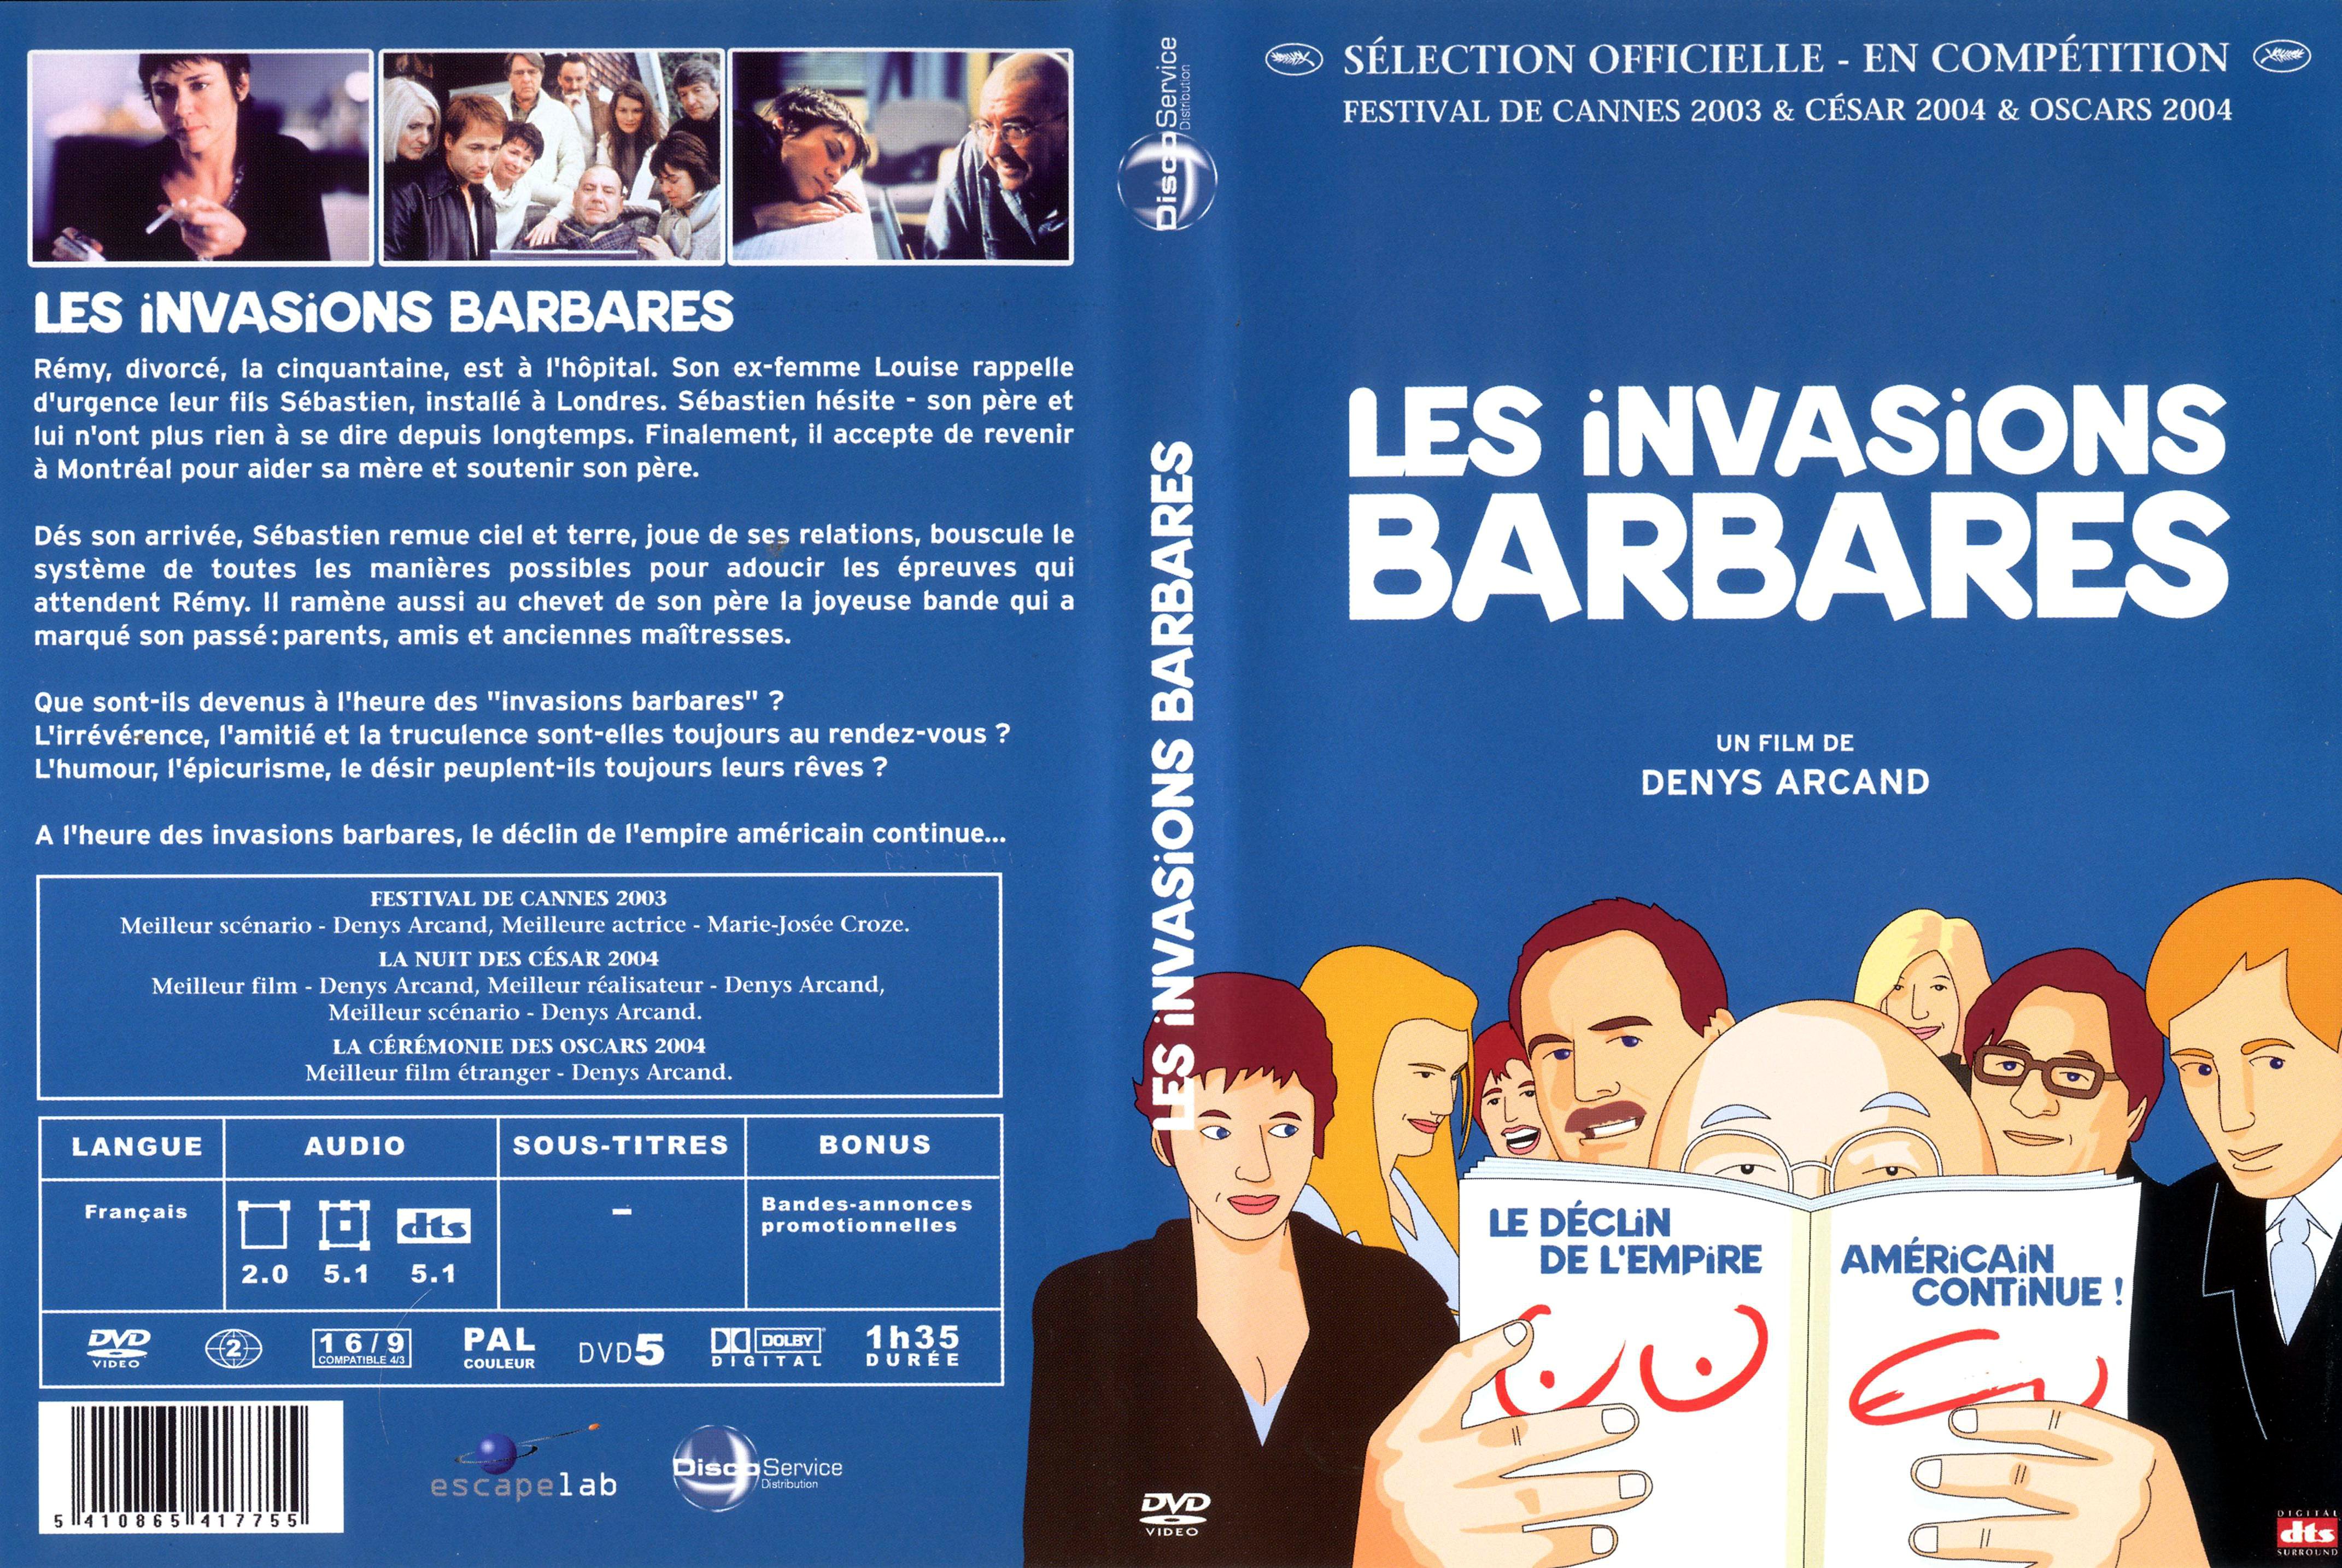 Jaquette DVD Les invasions barbares v2